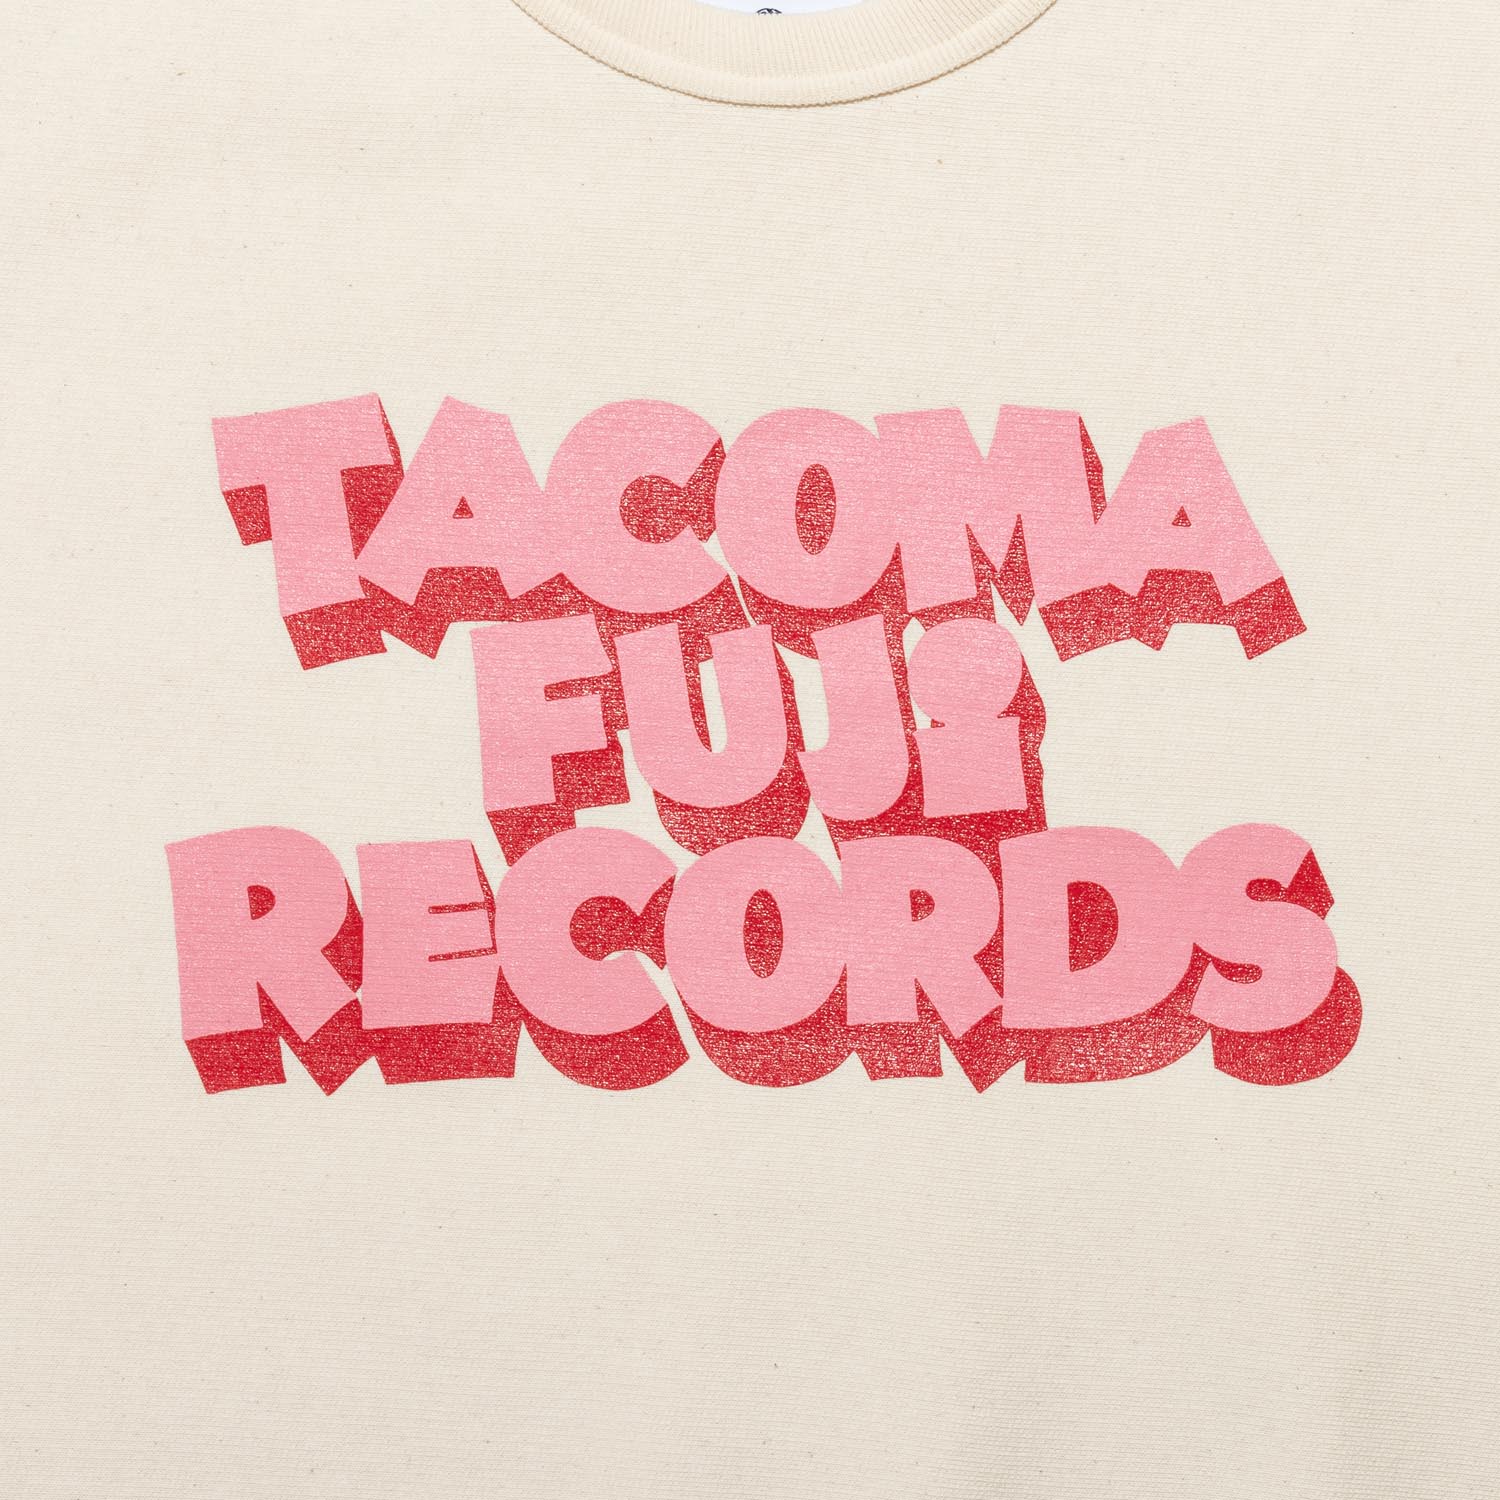 TACOMA FUJI RECORDS (JURASSIC edition) SWEATSHIRT designed by Jerry UKAI